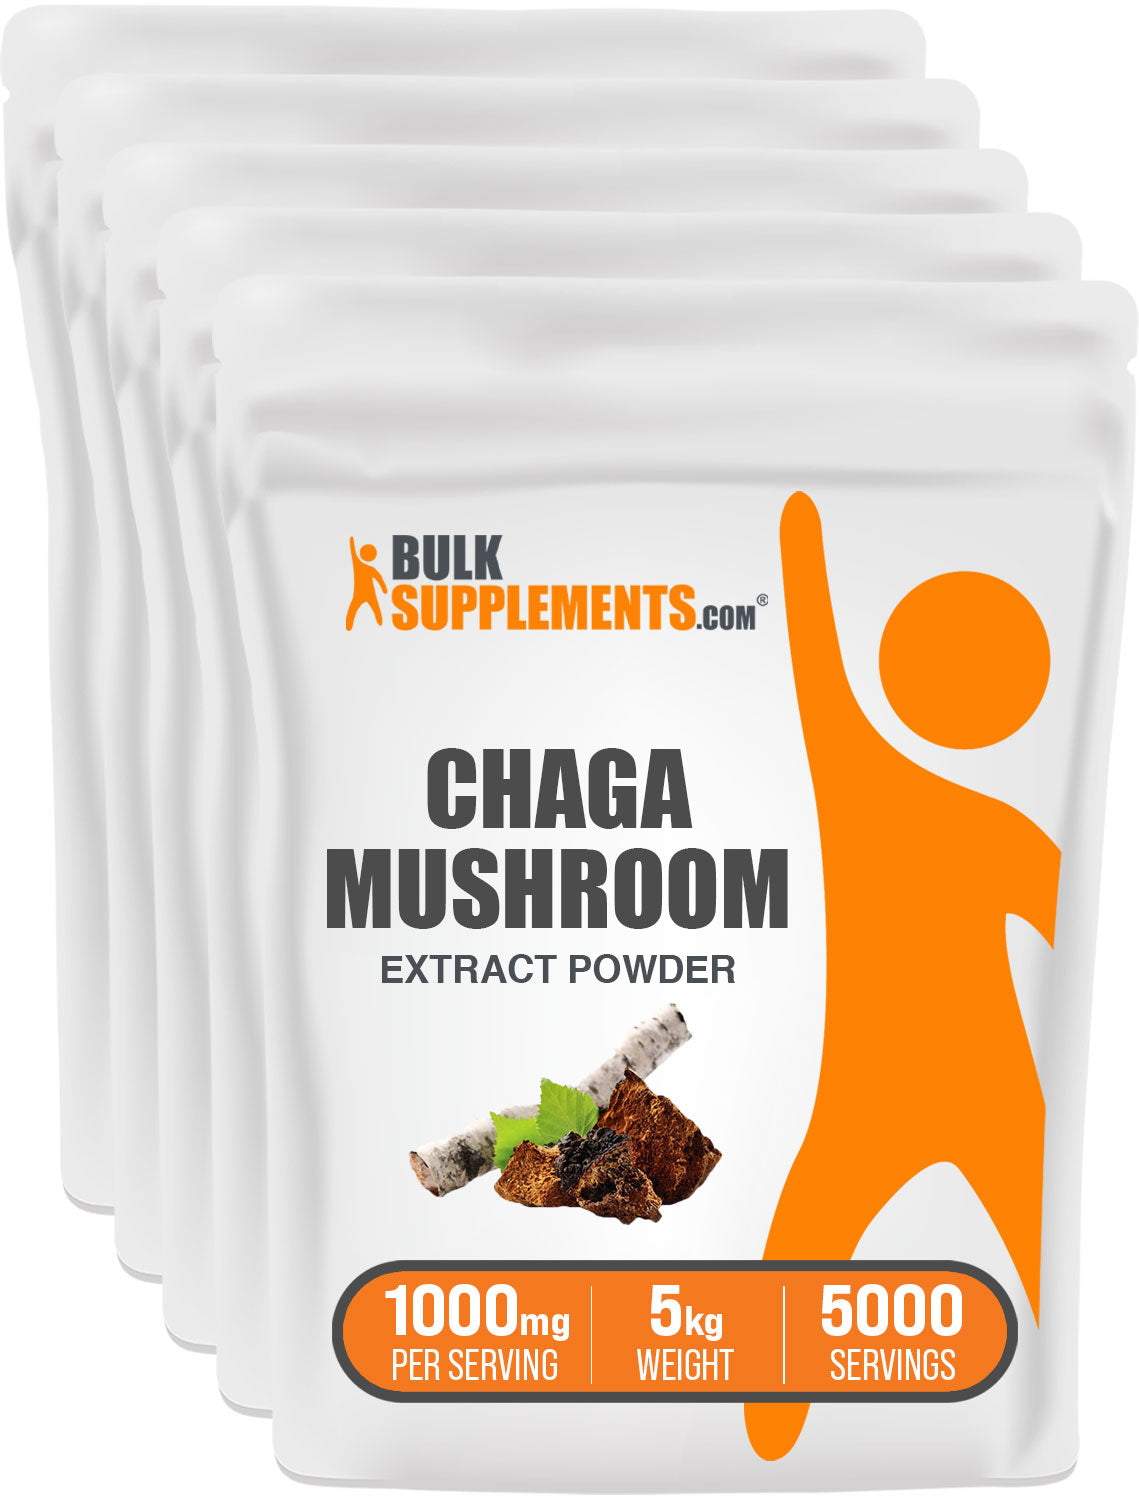 5kg of chaga mushroom supplement